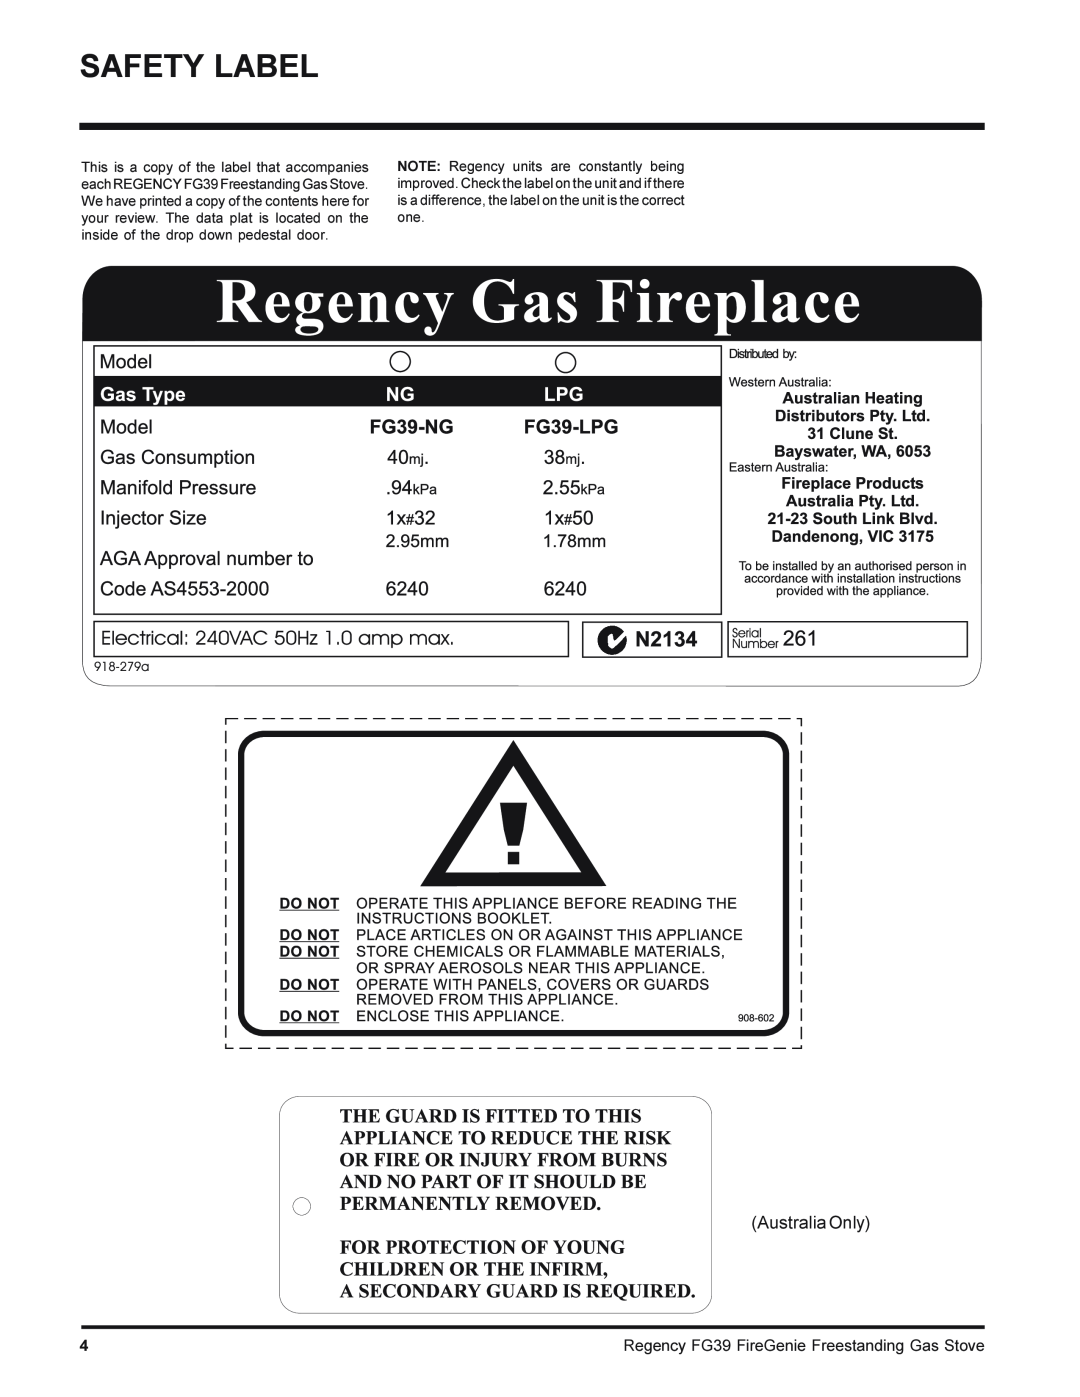 Regency FG39-LPG, FG39-NG installation manual Safety Label, Australia Only, Regency FG39 FireGenie Freestanding Gas Stove 